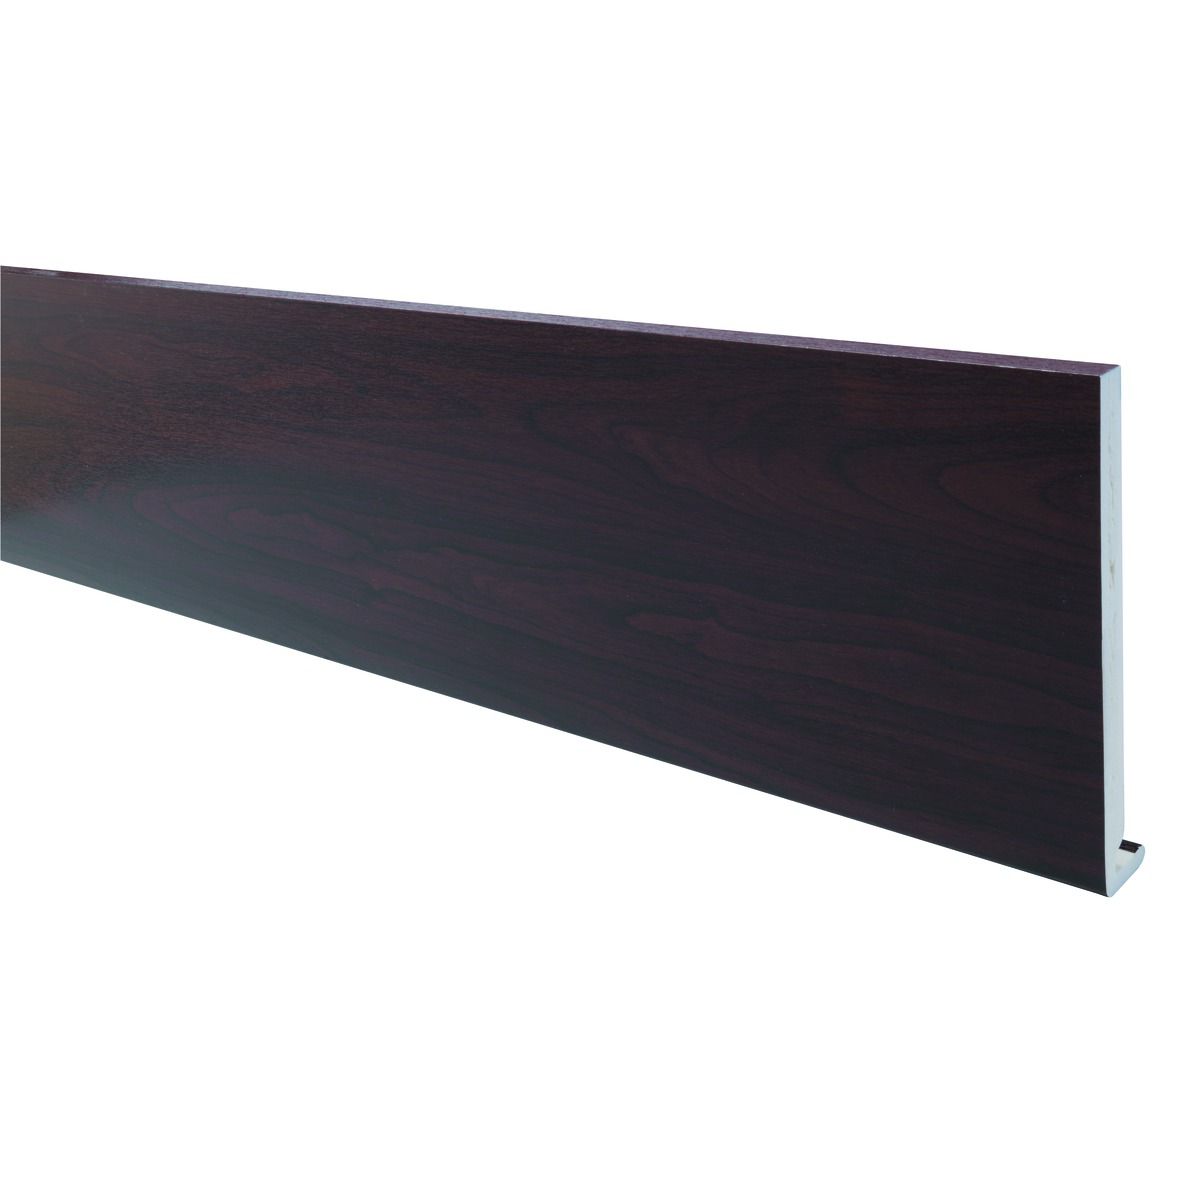 Image of Wickes PVCu Rosewood Fascia Board 18 x 175 x 2500mm